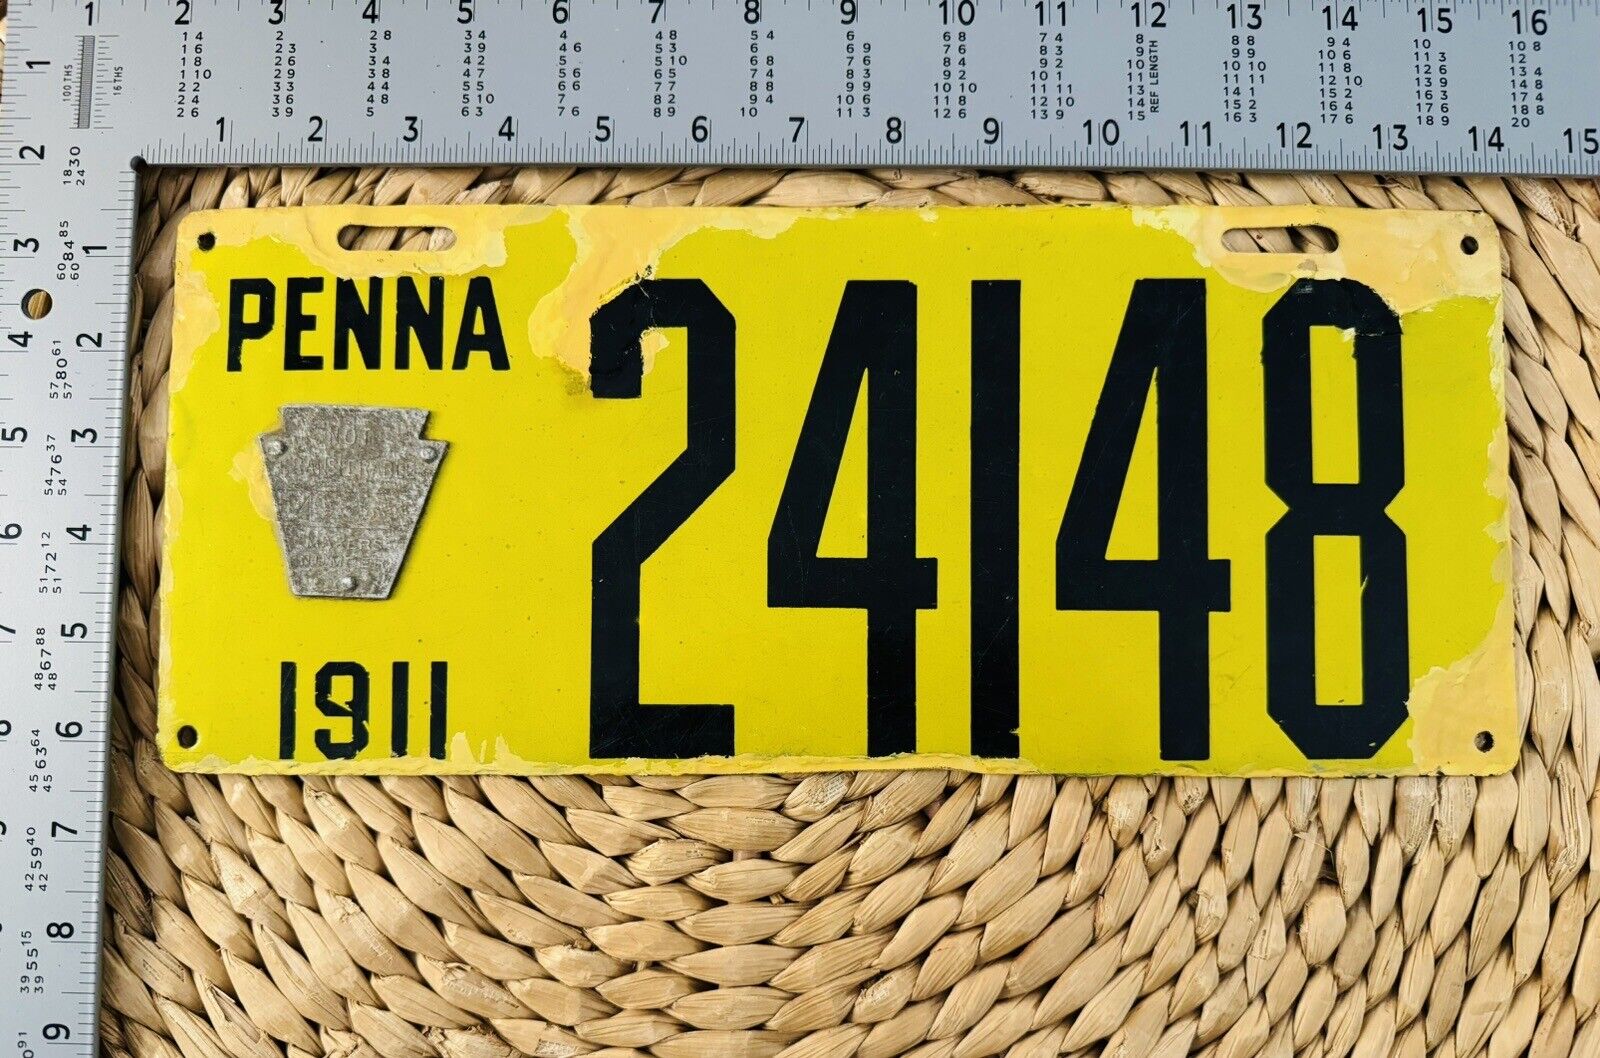 1911 Pennsylvania Porcelain License Plate 24148 ALPCA STERN CONSIGNMENT TU